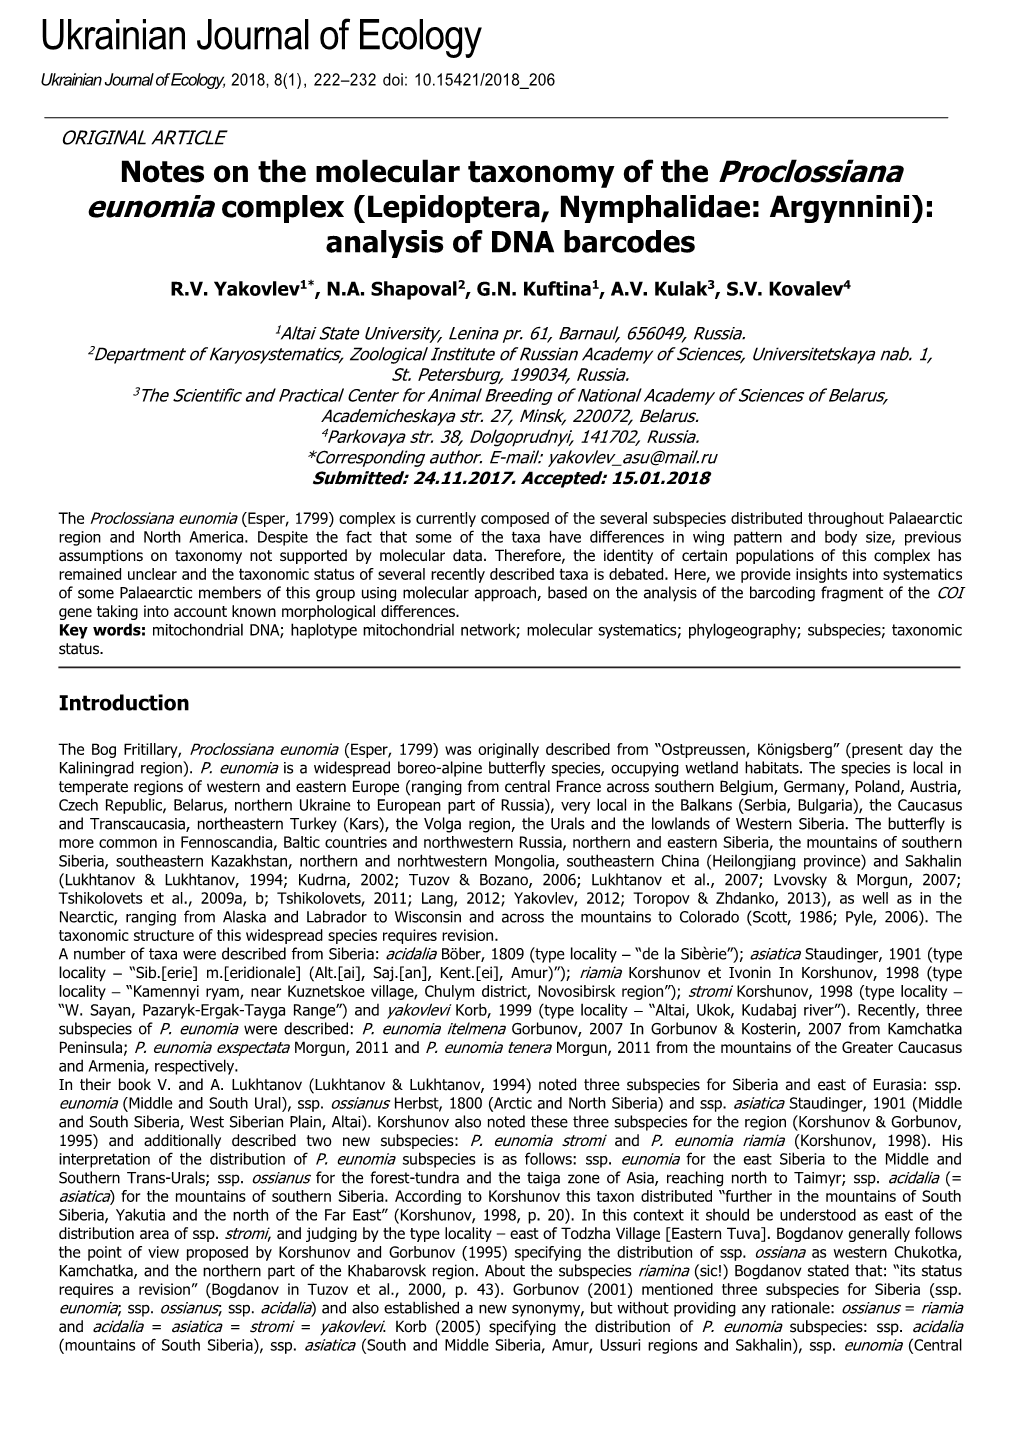 Lepidoptera, Nymphalidae: Argynnini): Analysis of DNA Barcodes